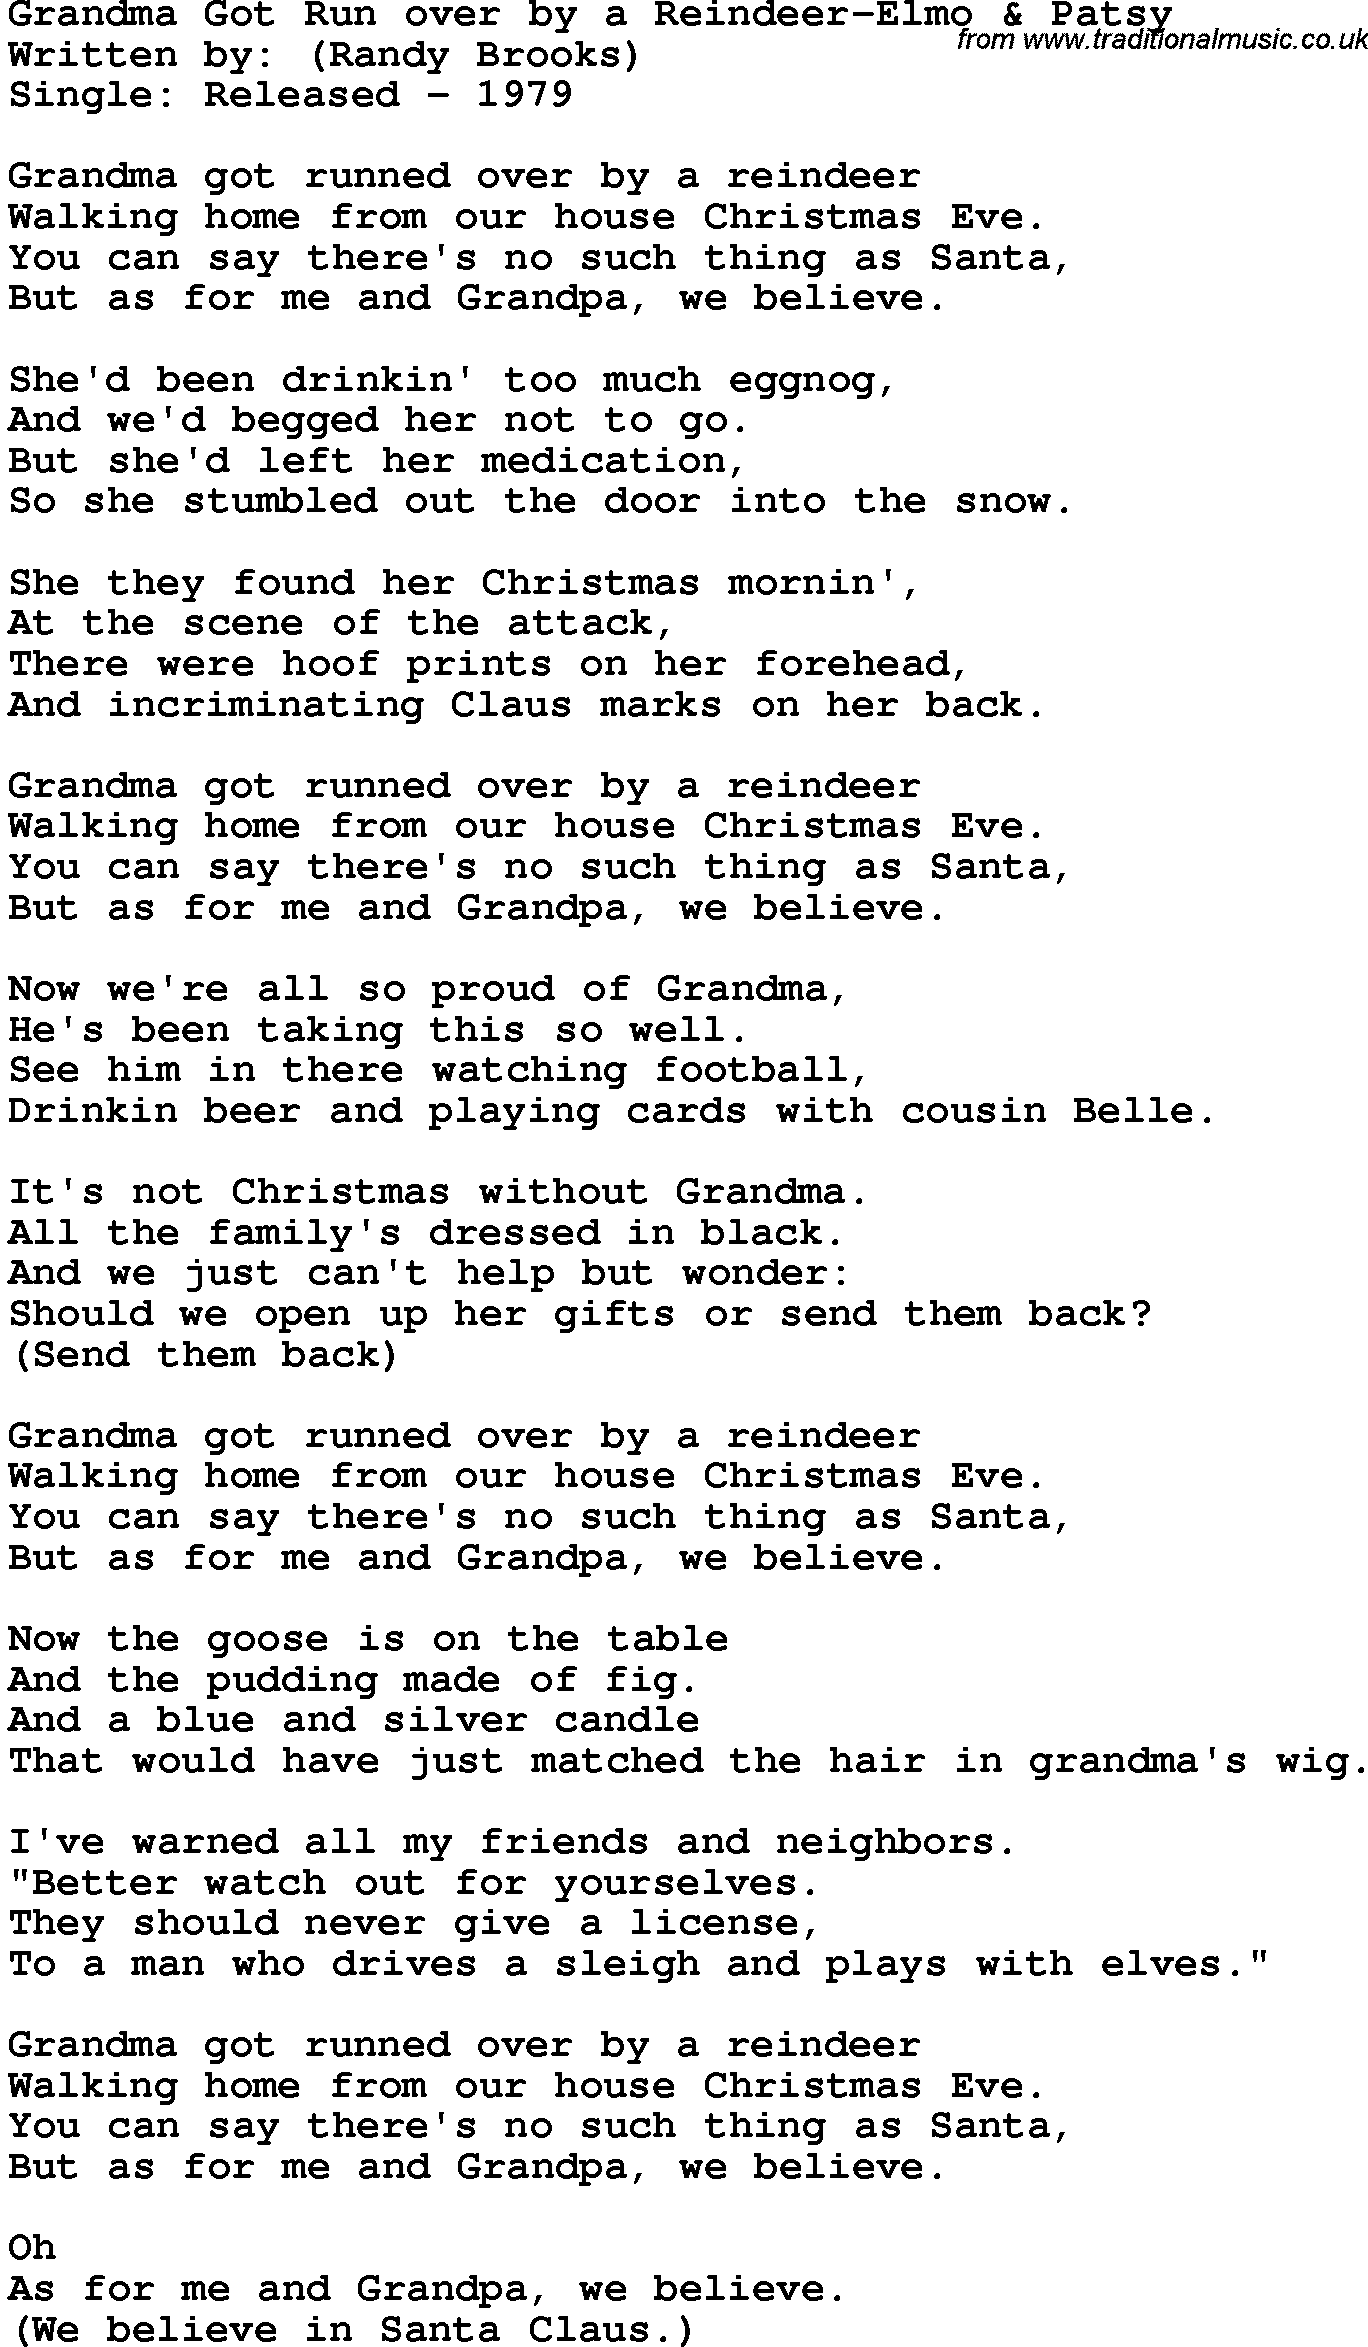 Novelty song: Grandma Got Run Over By A Reindeer-Elmo Patsy lyrics